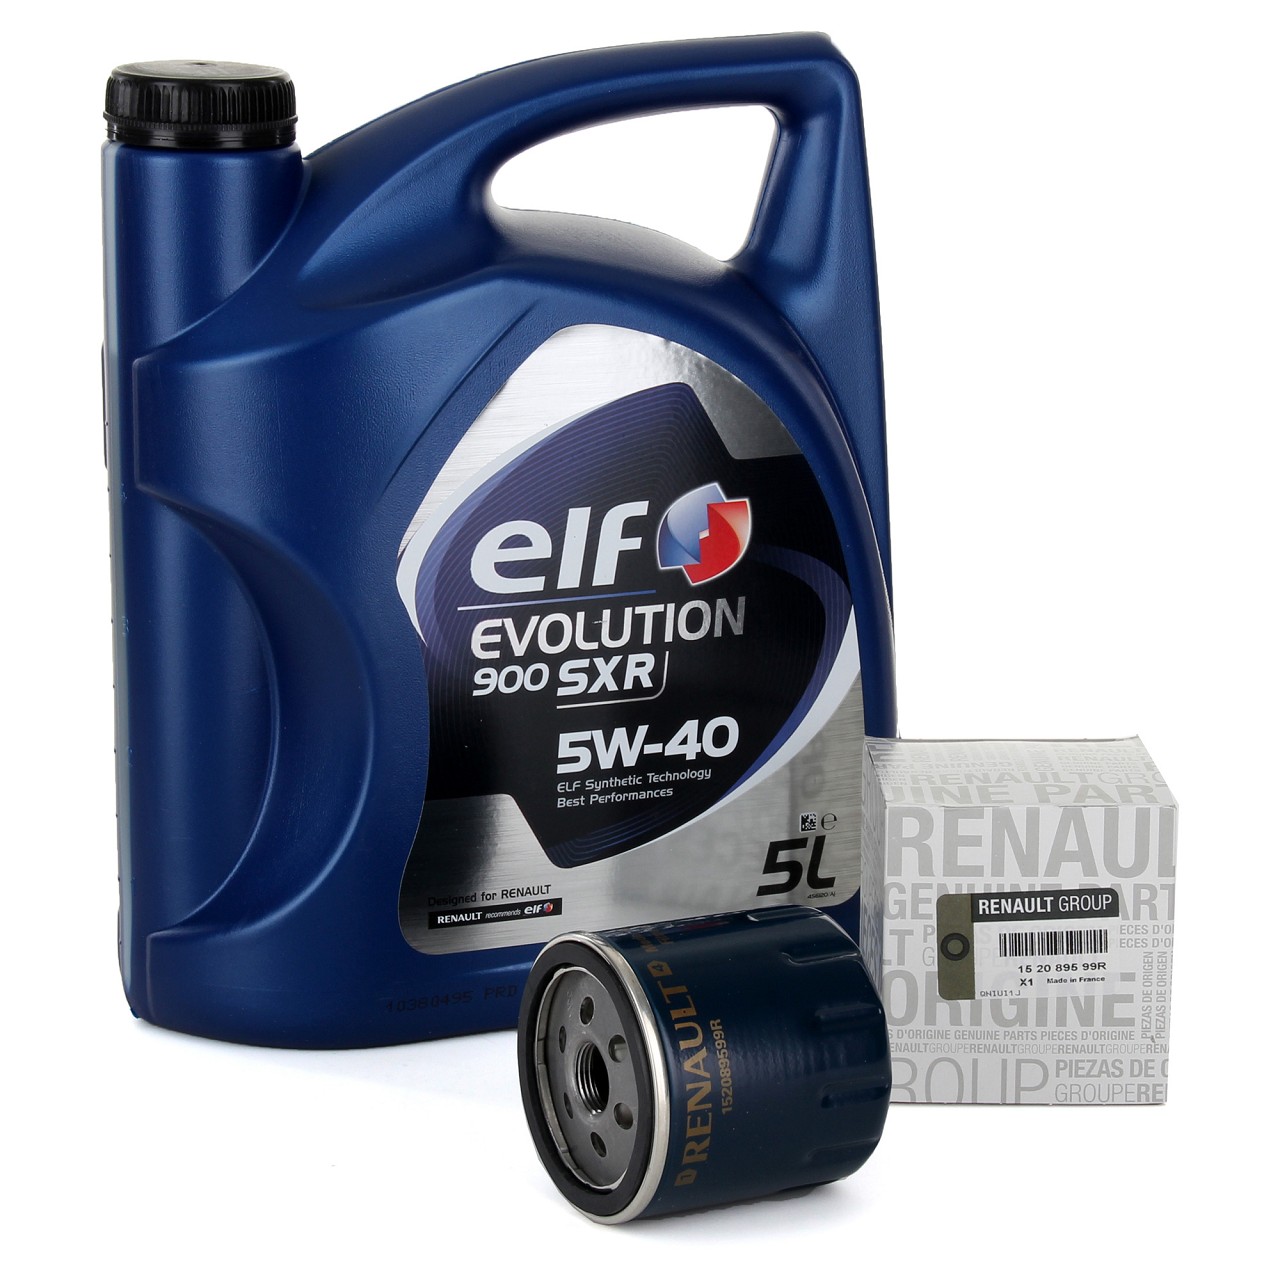 5L elf Evolution 900 SXR 5W-40 Motoröl + ORIGINAL Renault Ölfilter 152089599R